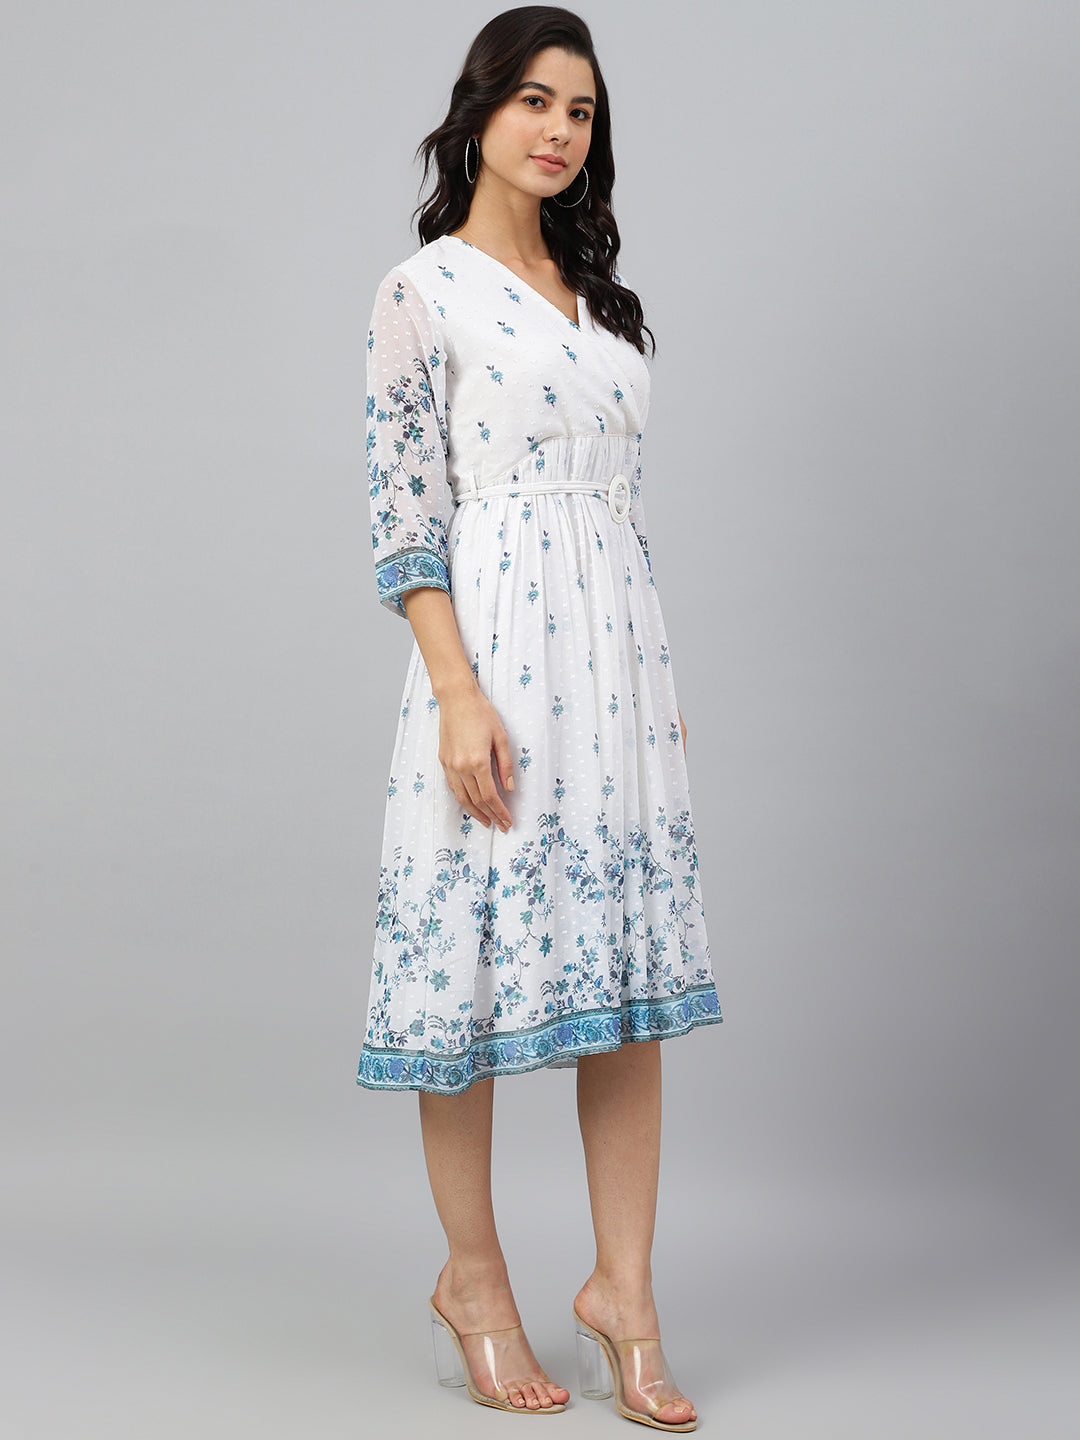 Women's Digital Printed White Georgette Dress - Janasya